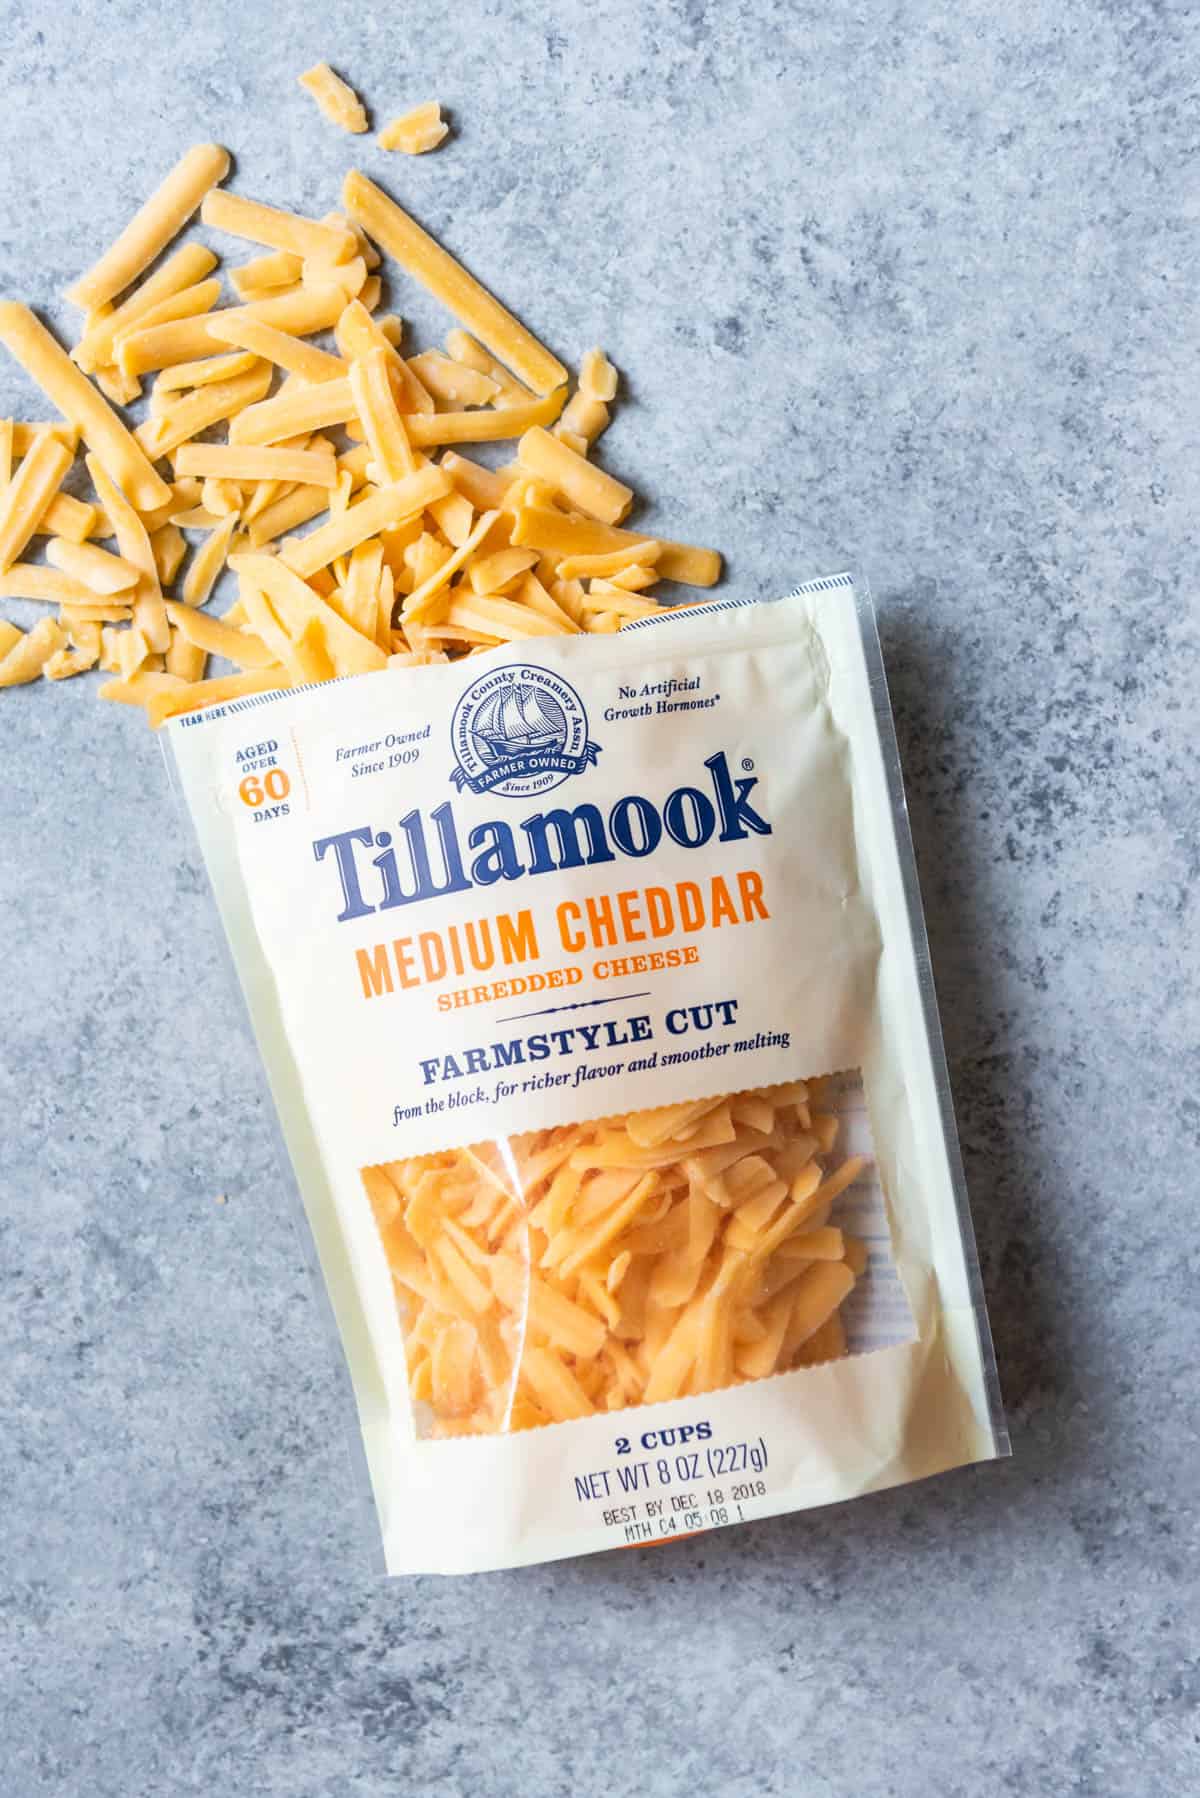 An image of Tillamook farmstyle cut cheddar cheese.